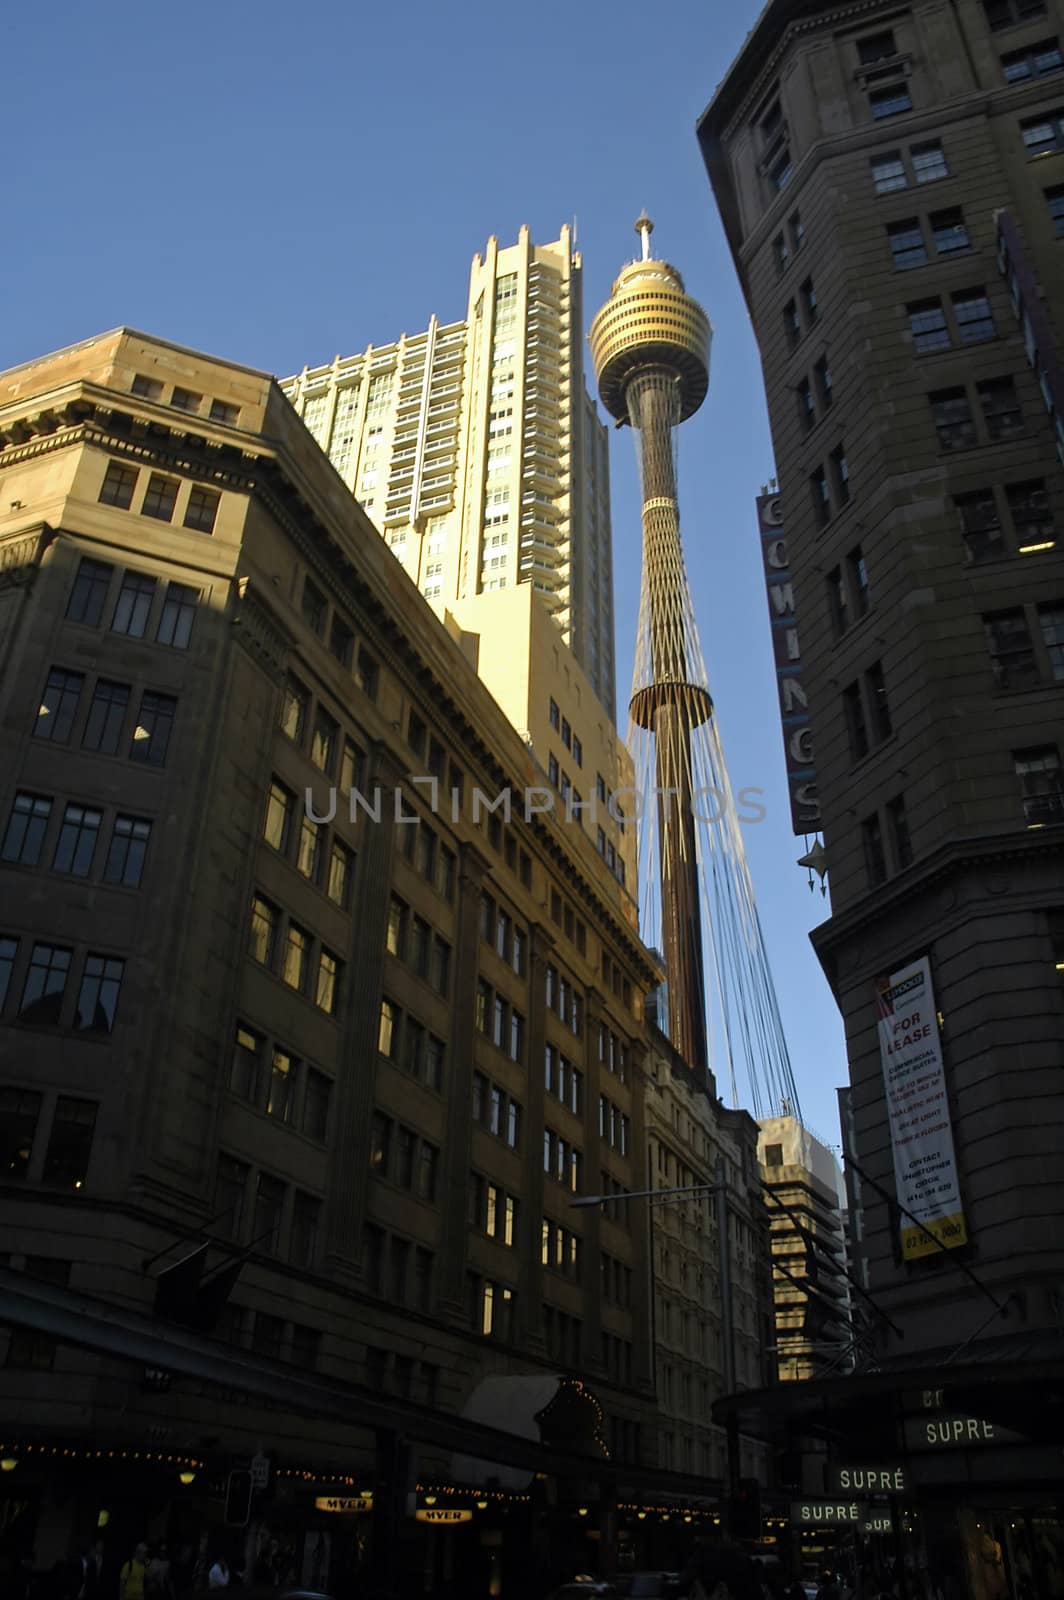 tower in Sydney, buildings in shadow, clear blue sky